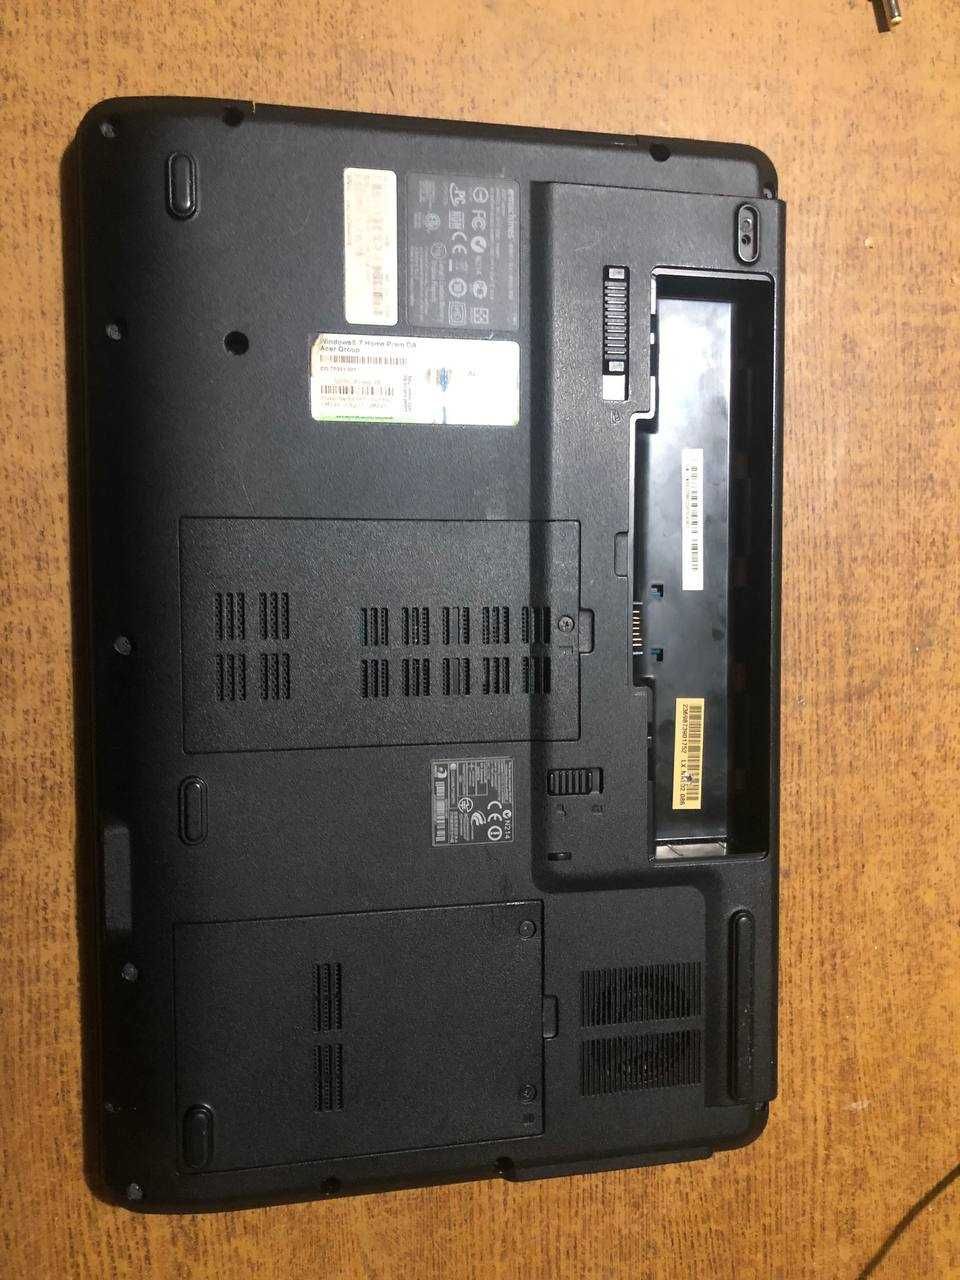 Ноотбук Emachines E527 (Acer) 2000грн (договірна)